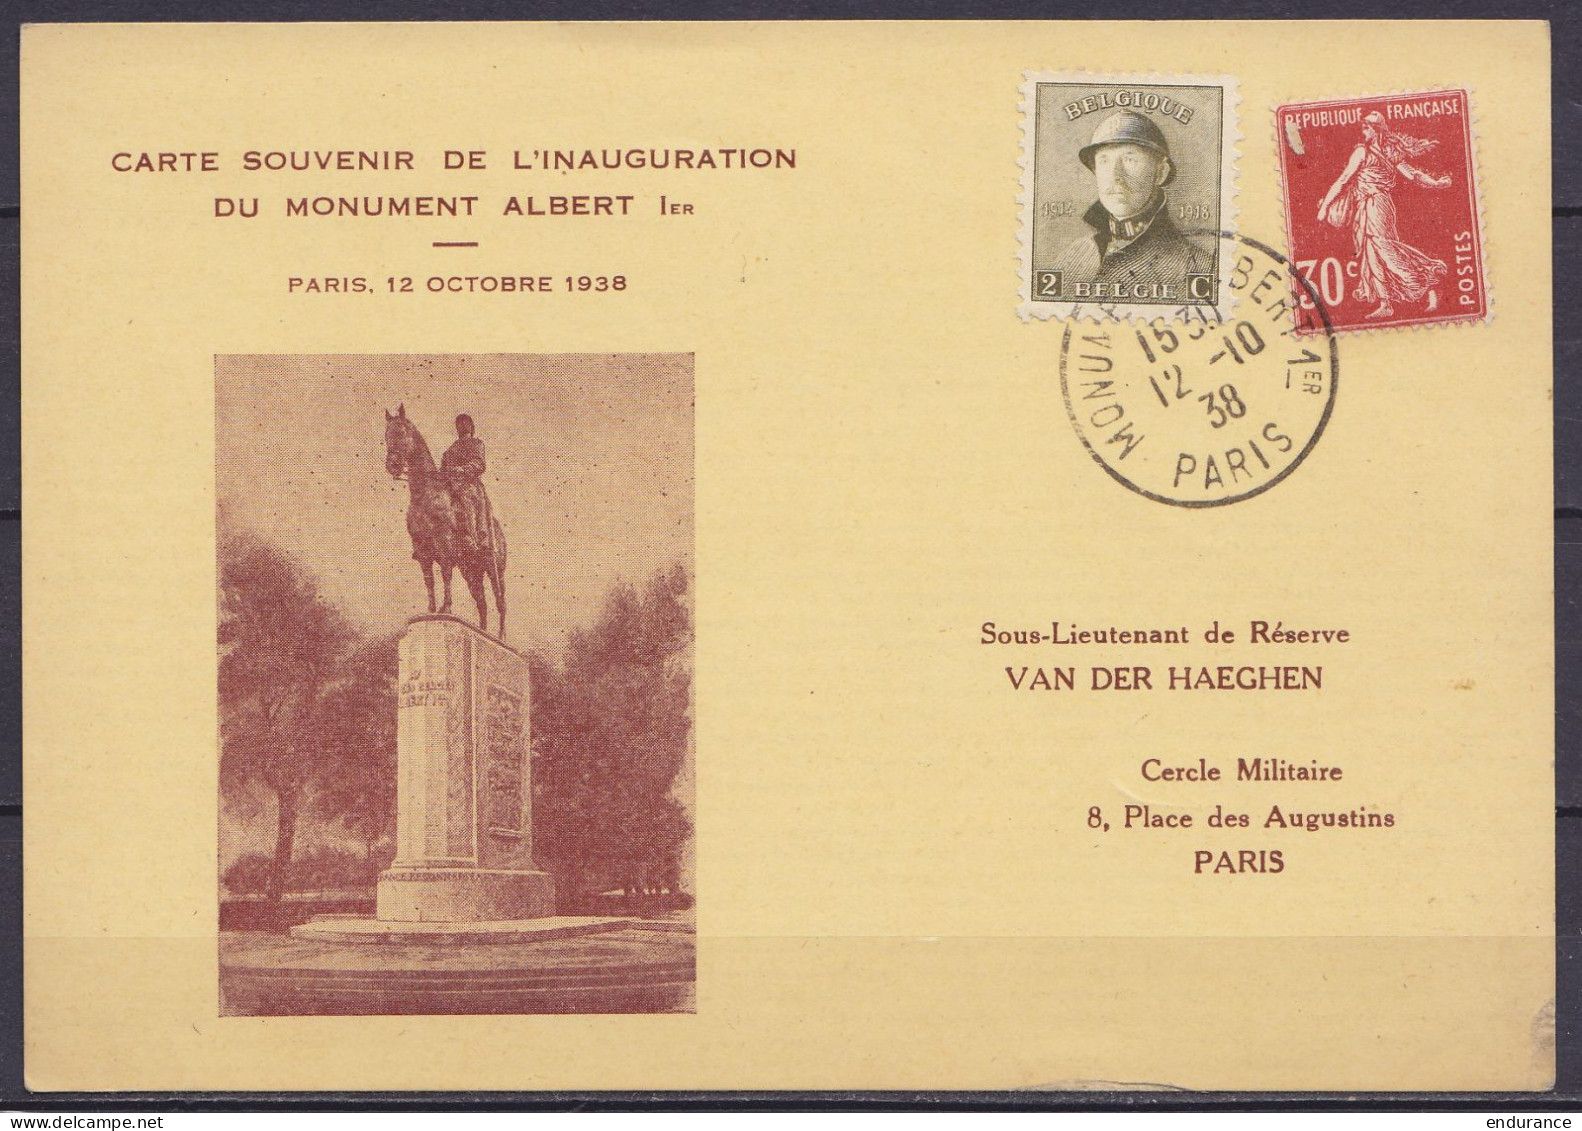 Carte Souvenir De L'inauguration Du Monument Albert 1e Affr. N°166 + Semeuse 30c Càd "MONUMENT ALBERT 1e /12-10-1938/ PA - 1919-1920  Re Con Casco